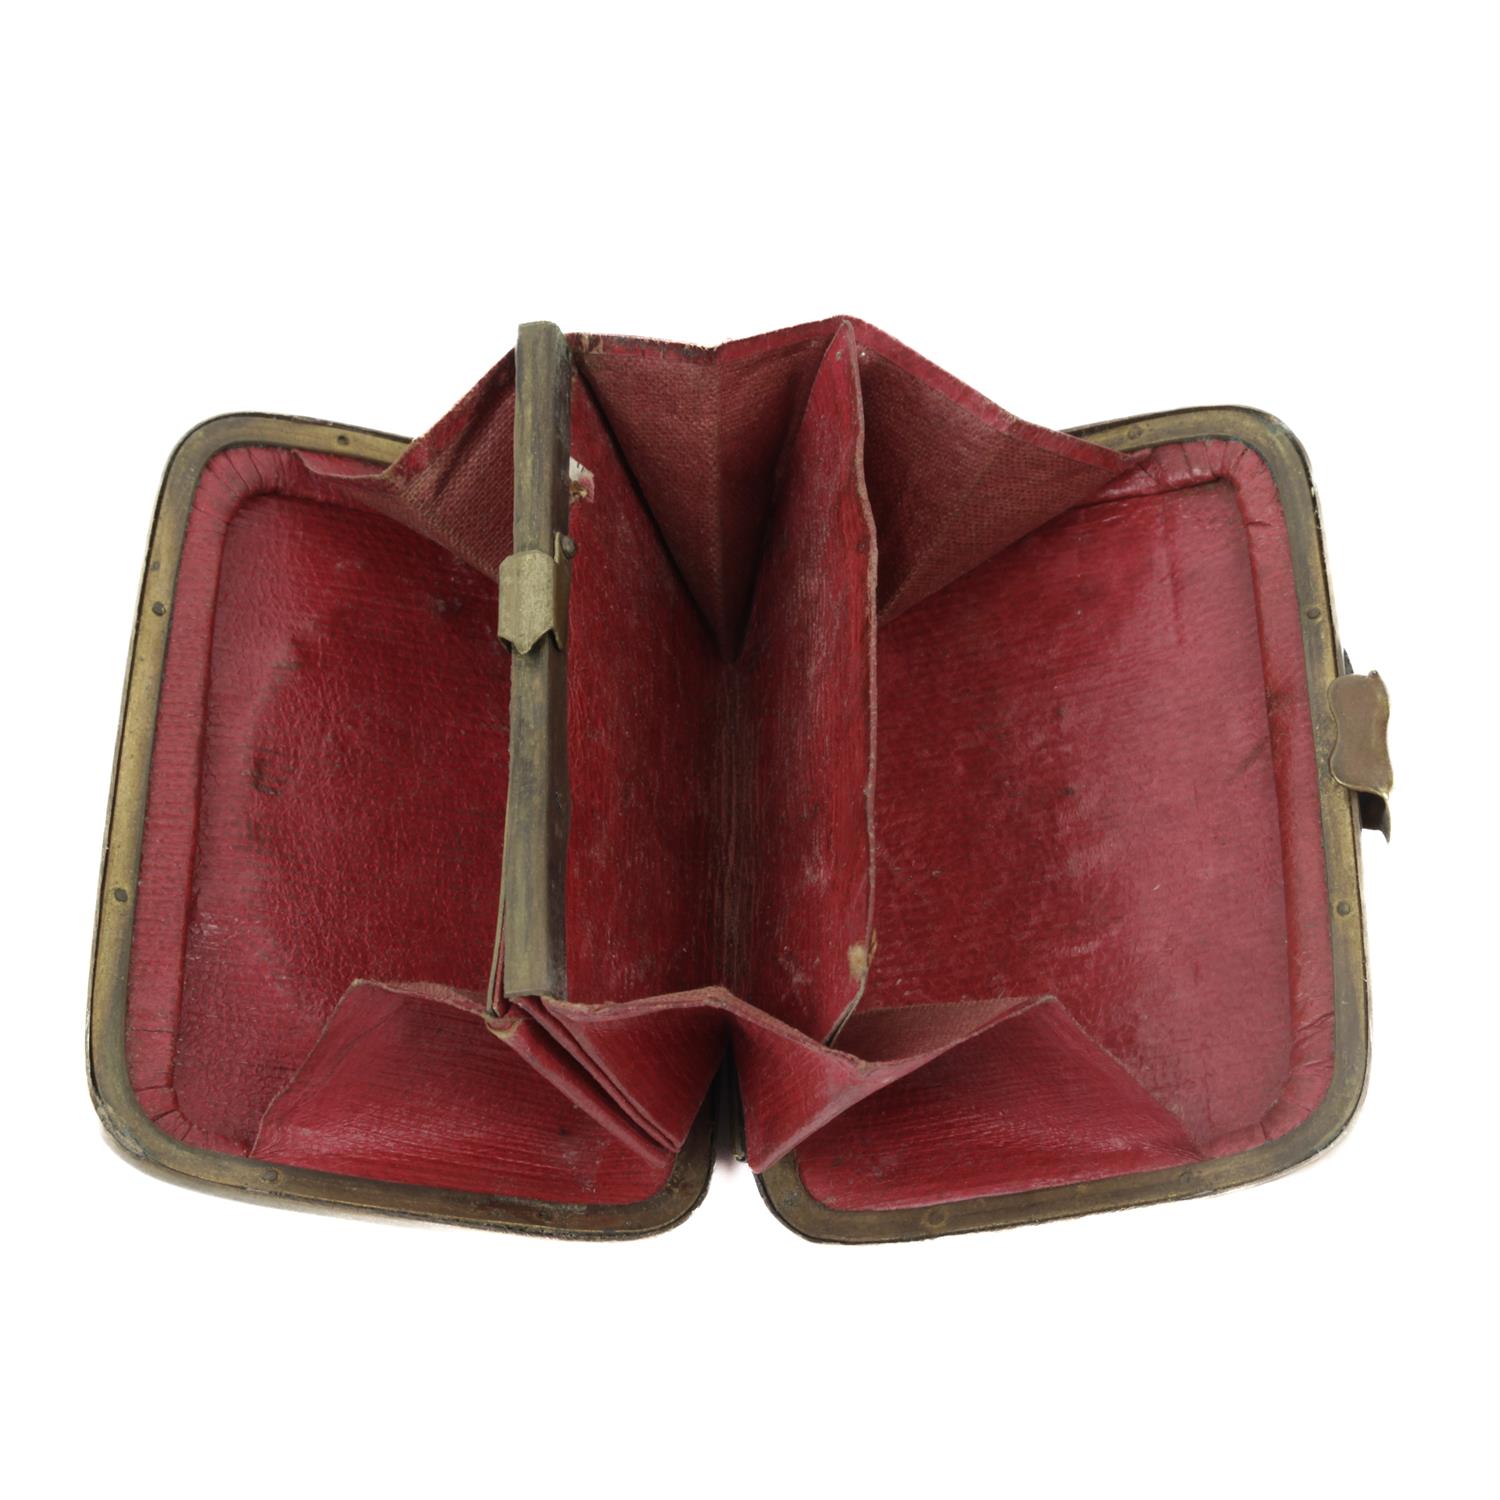 Alan Grainger 'Acornman' ashtray, bone dog whistle and a souvenir purse - Image 5 of 5